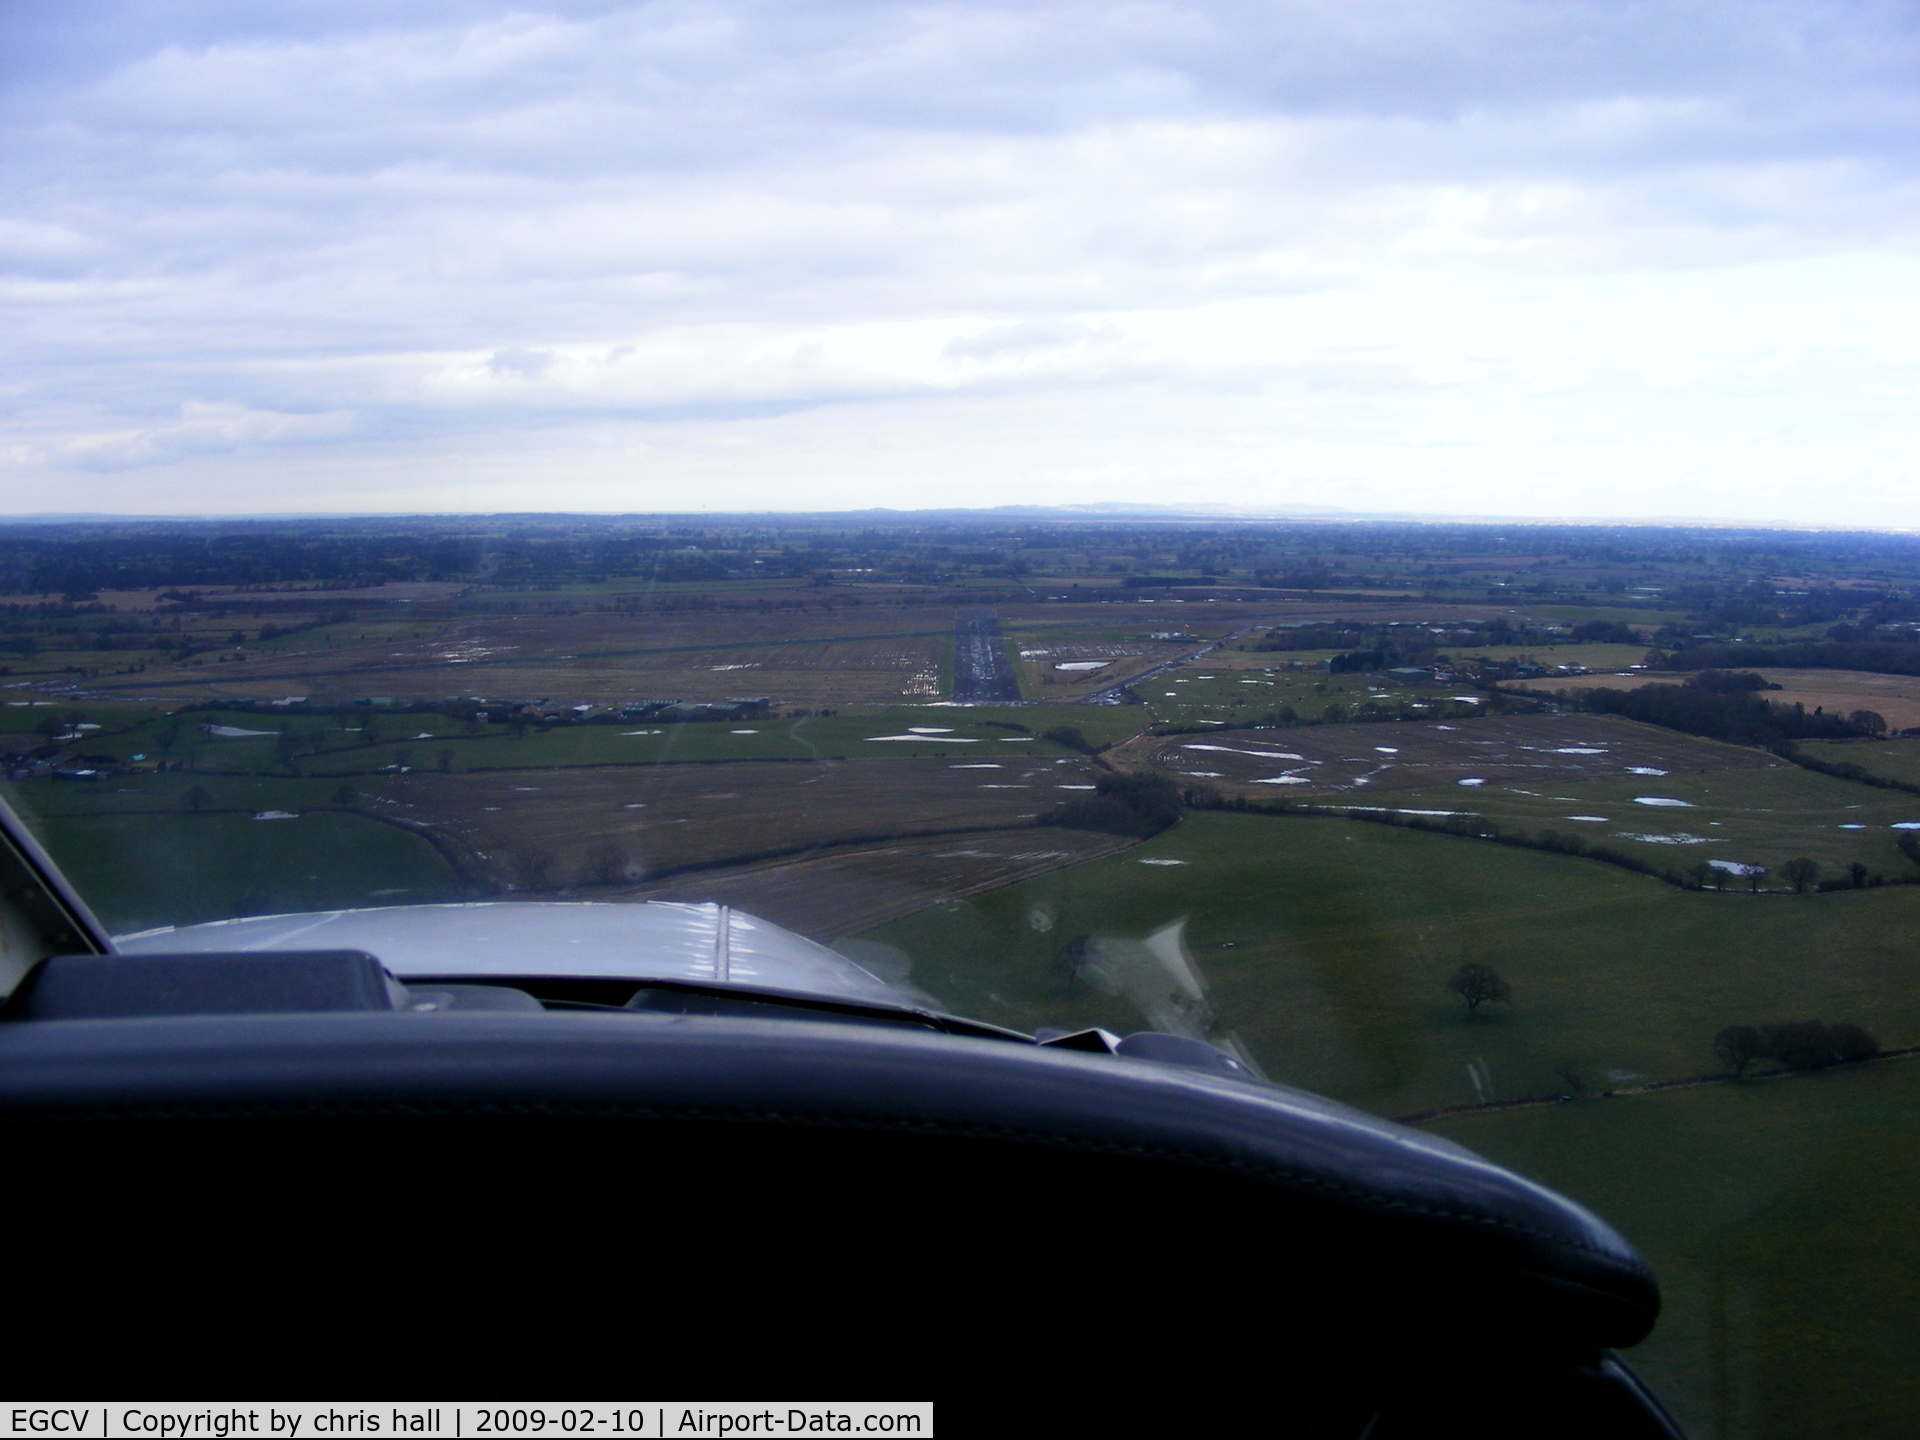 Sleap Airfield Airport, Shrewsbury, England United Kingdom (EGCV) - on approach to Sleap Airfield